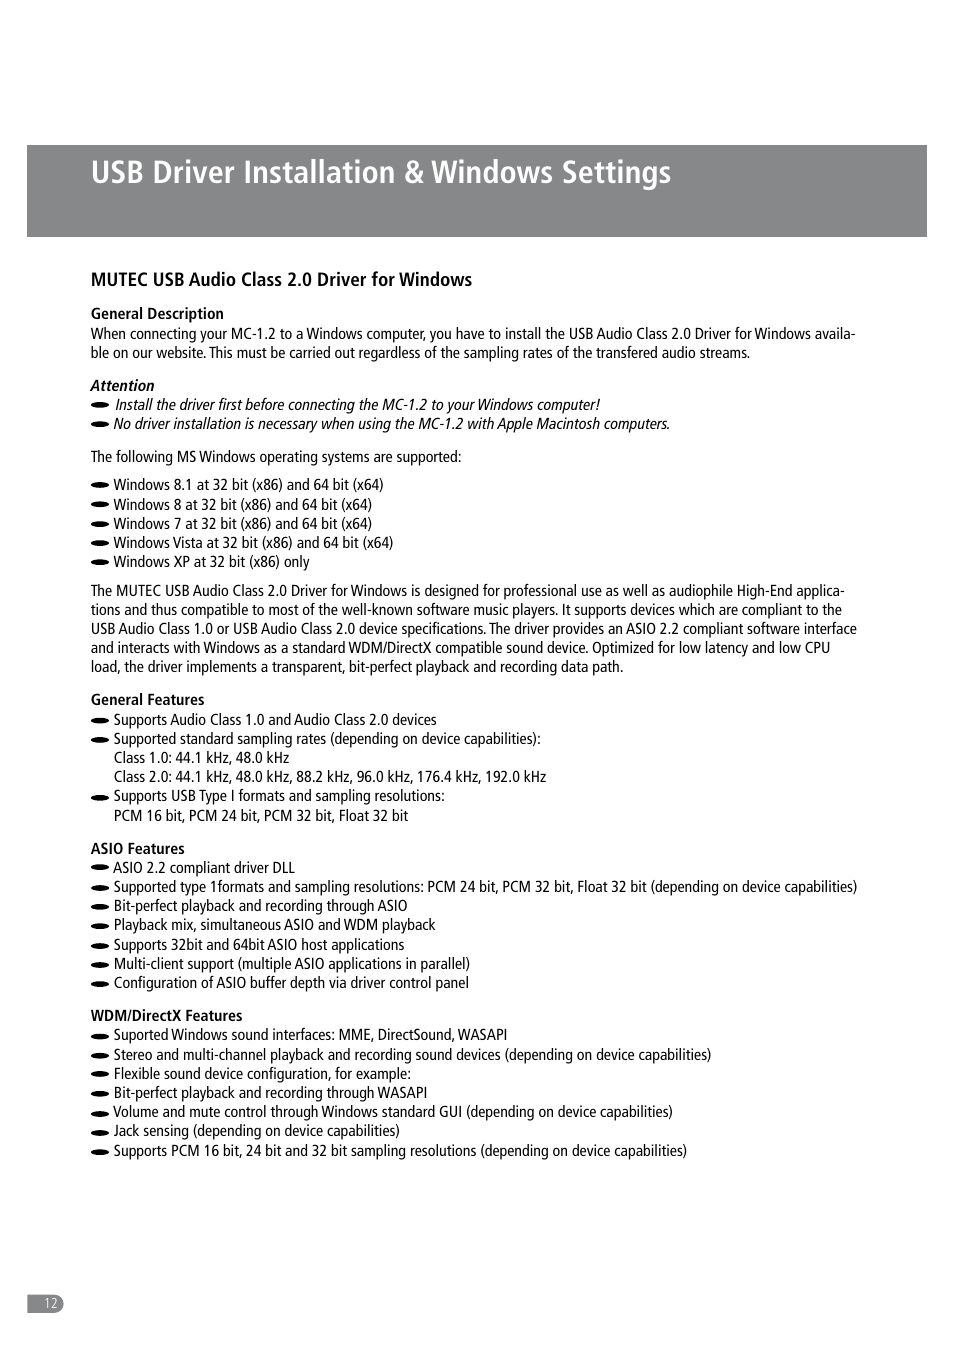 Usb driver installation & windows settings | MUTEC MC-1.2 User Manual |  Page 12 / 20